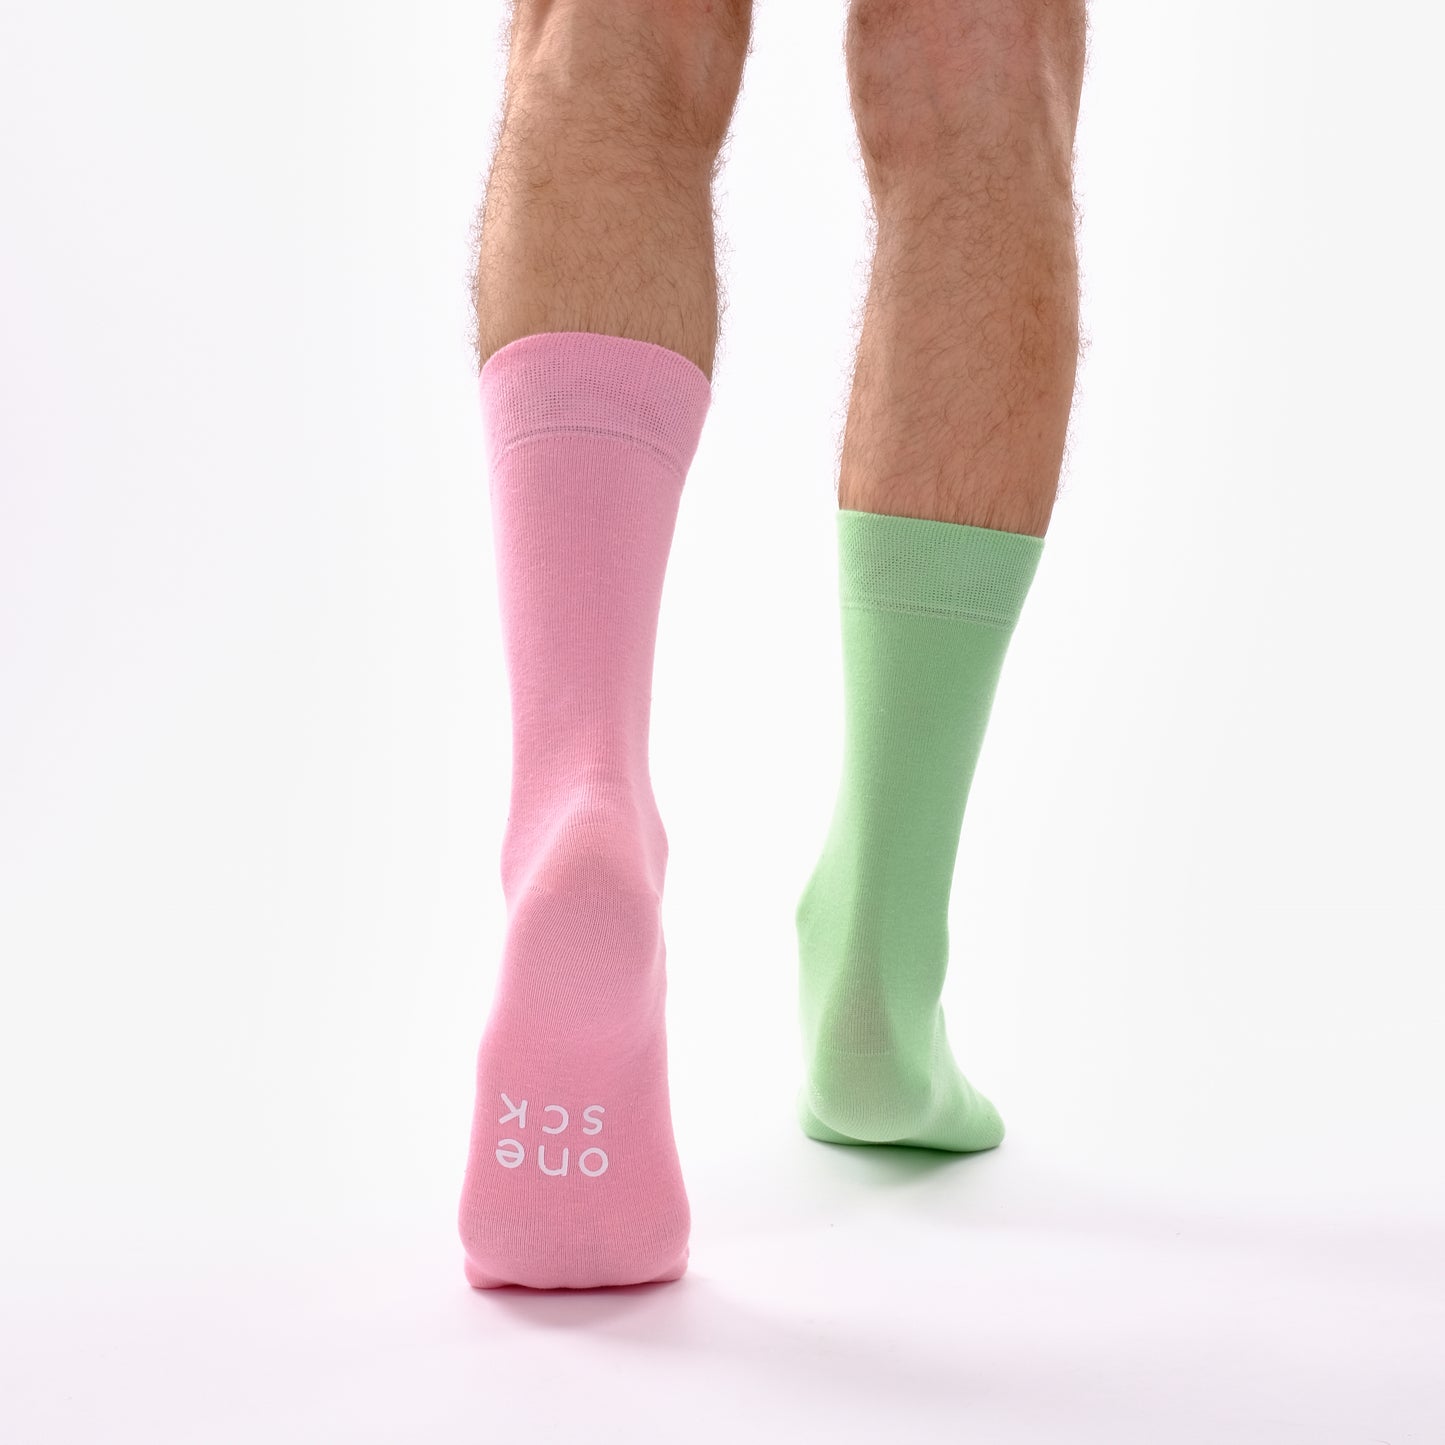 Candy Pink & Seafoam Green Odd Socks